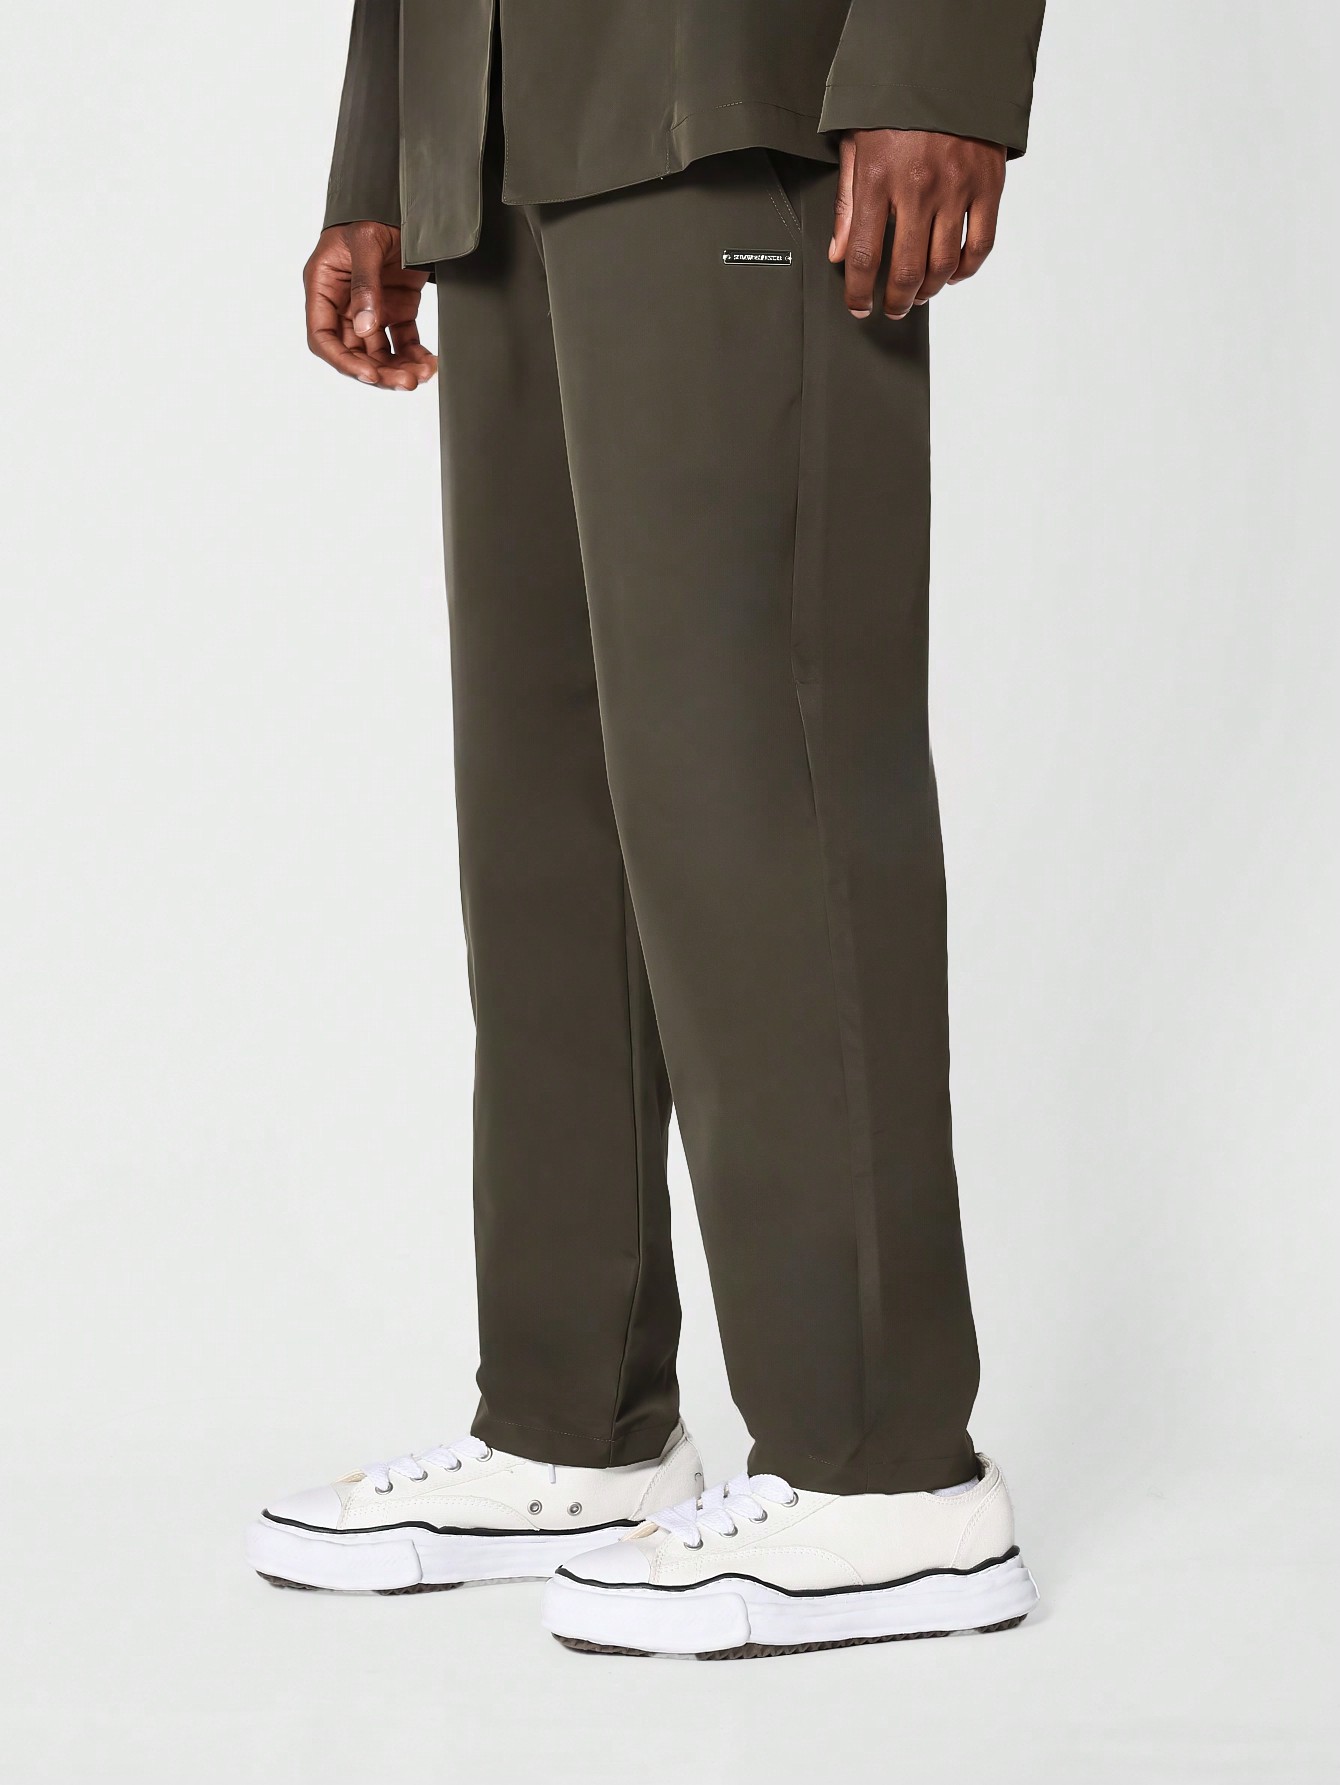 men s fitness jogging sport suit trouser SUMWON Нейлоновые брюки для костюма, мокко браун